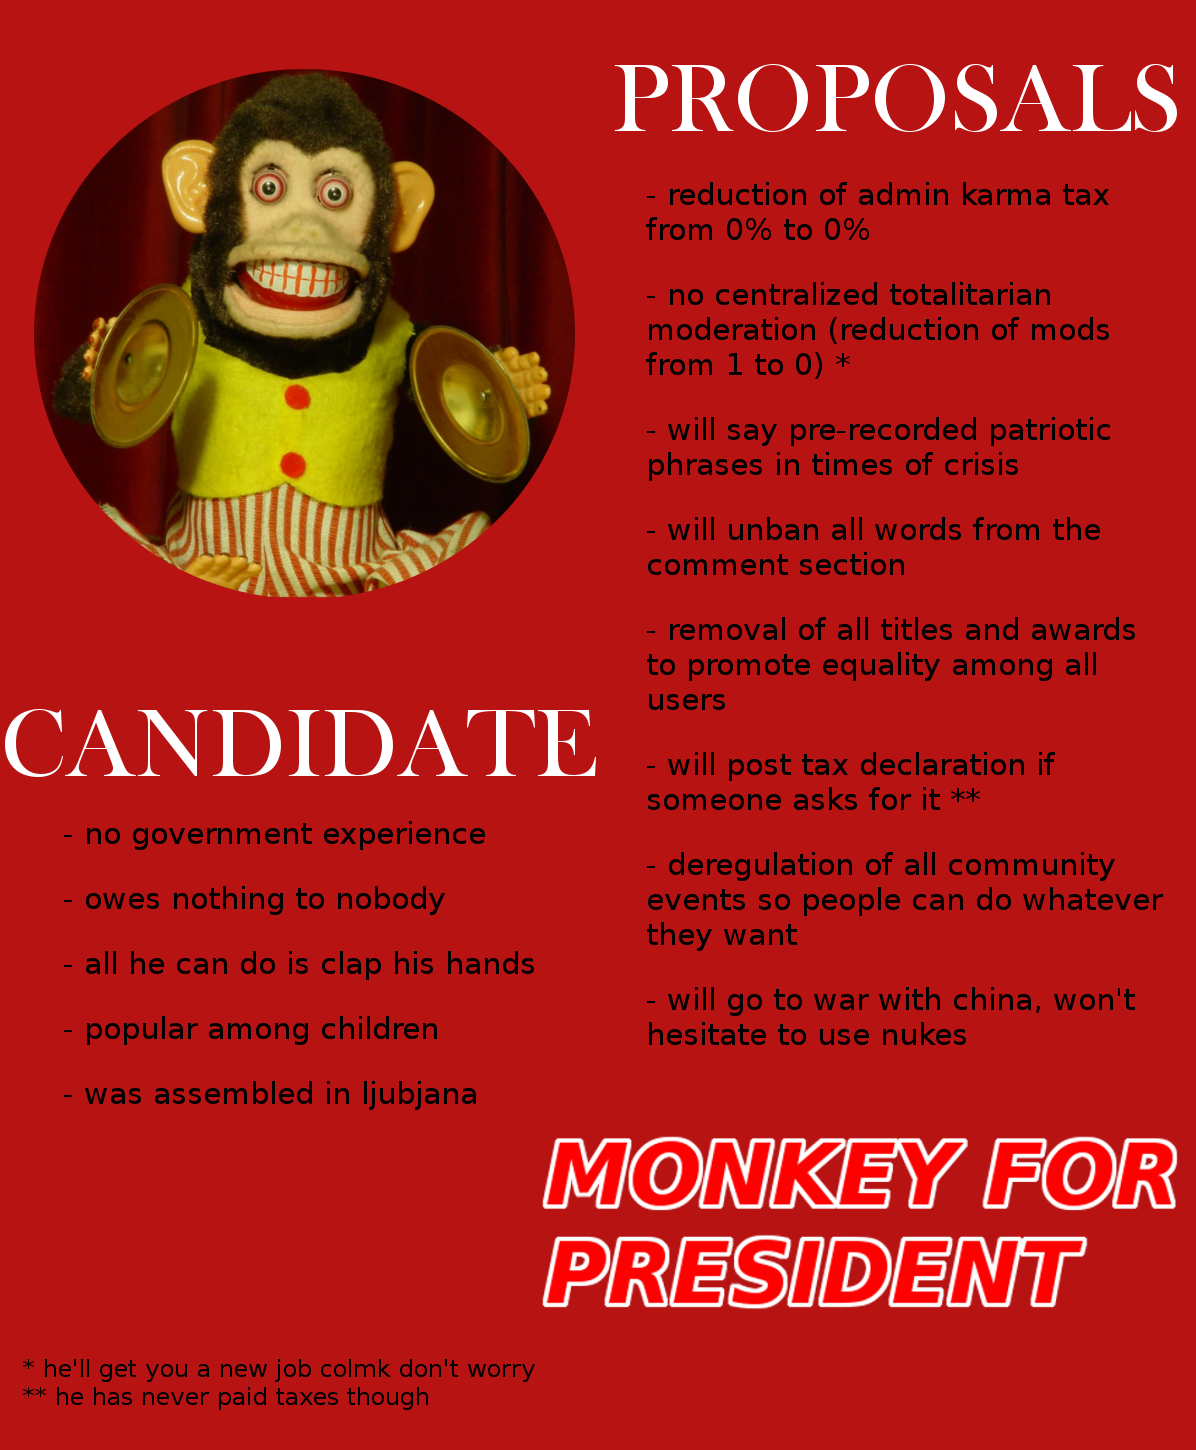 monkey cannot speak so i am his brehpresentative #HLBrehlectionDay #LibrehtarianCandidate